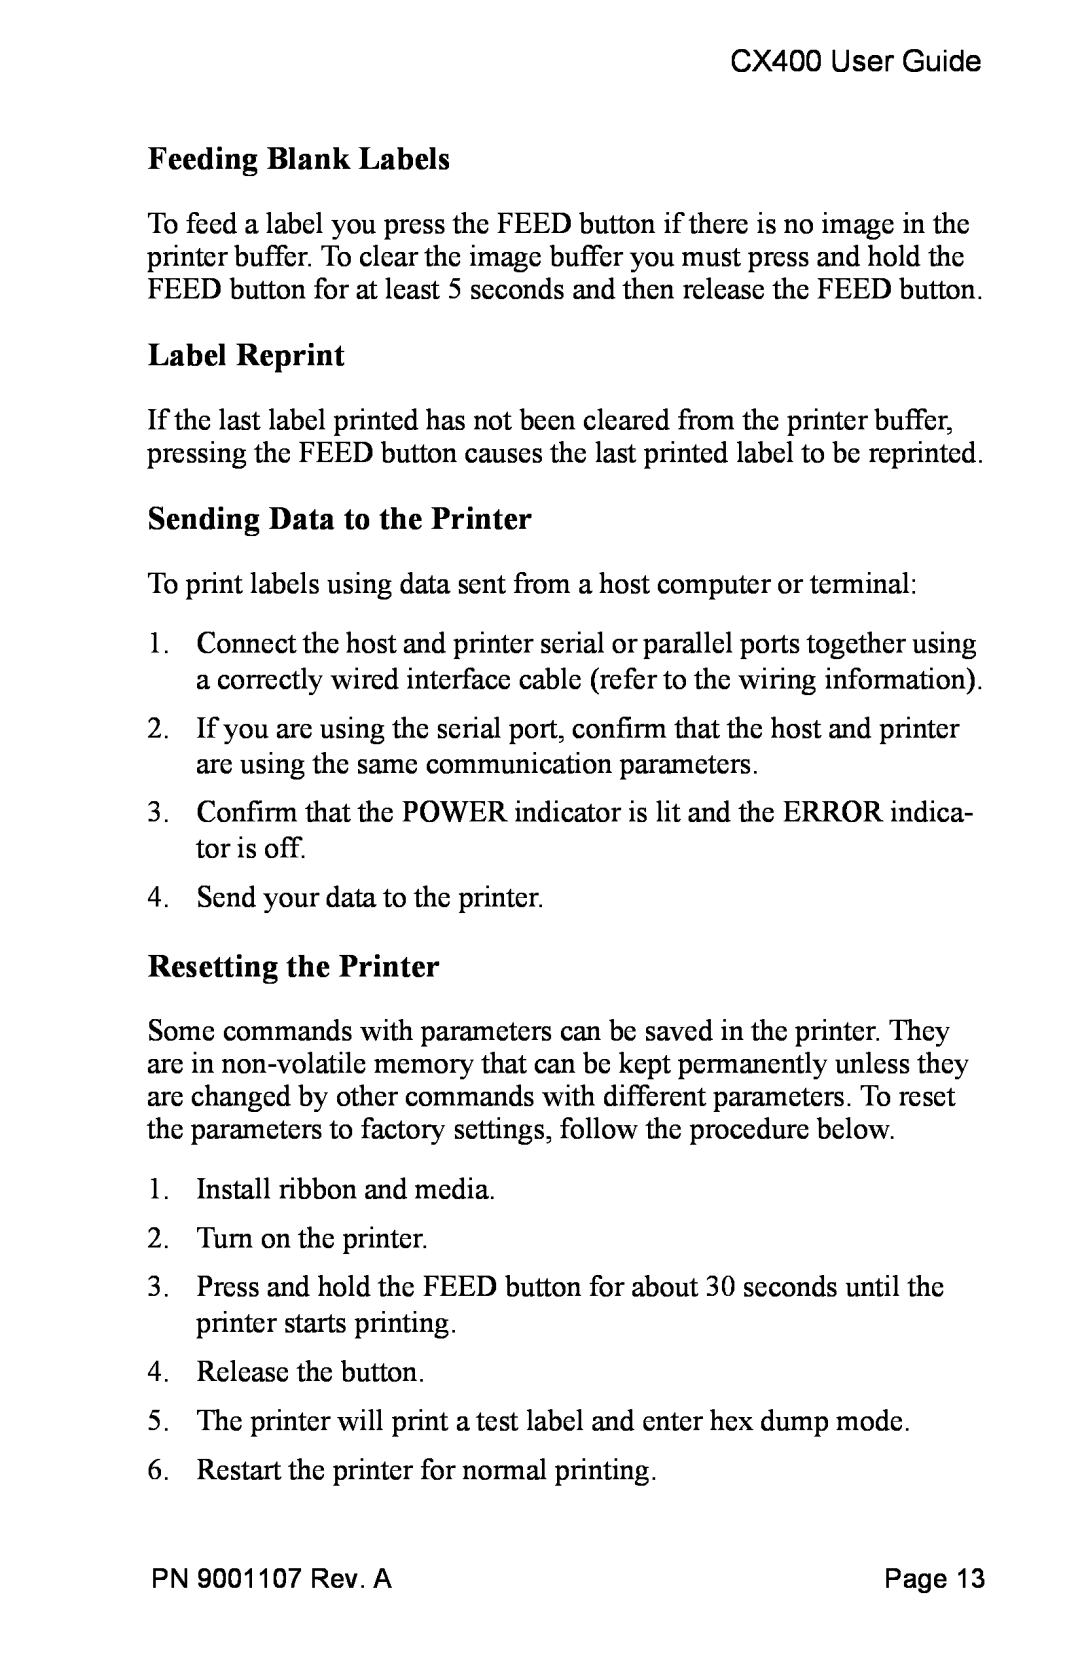 SATO 400 manual Feeding Blank Labels, Label Reprint, Sending Data to the Printer, Resetting the Printer 